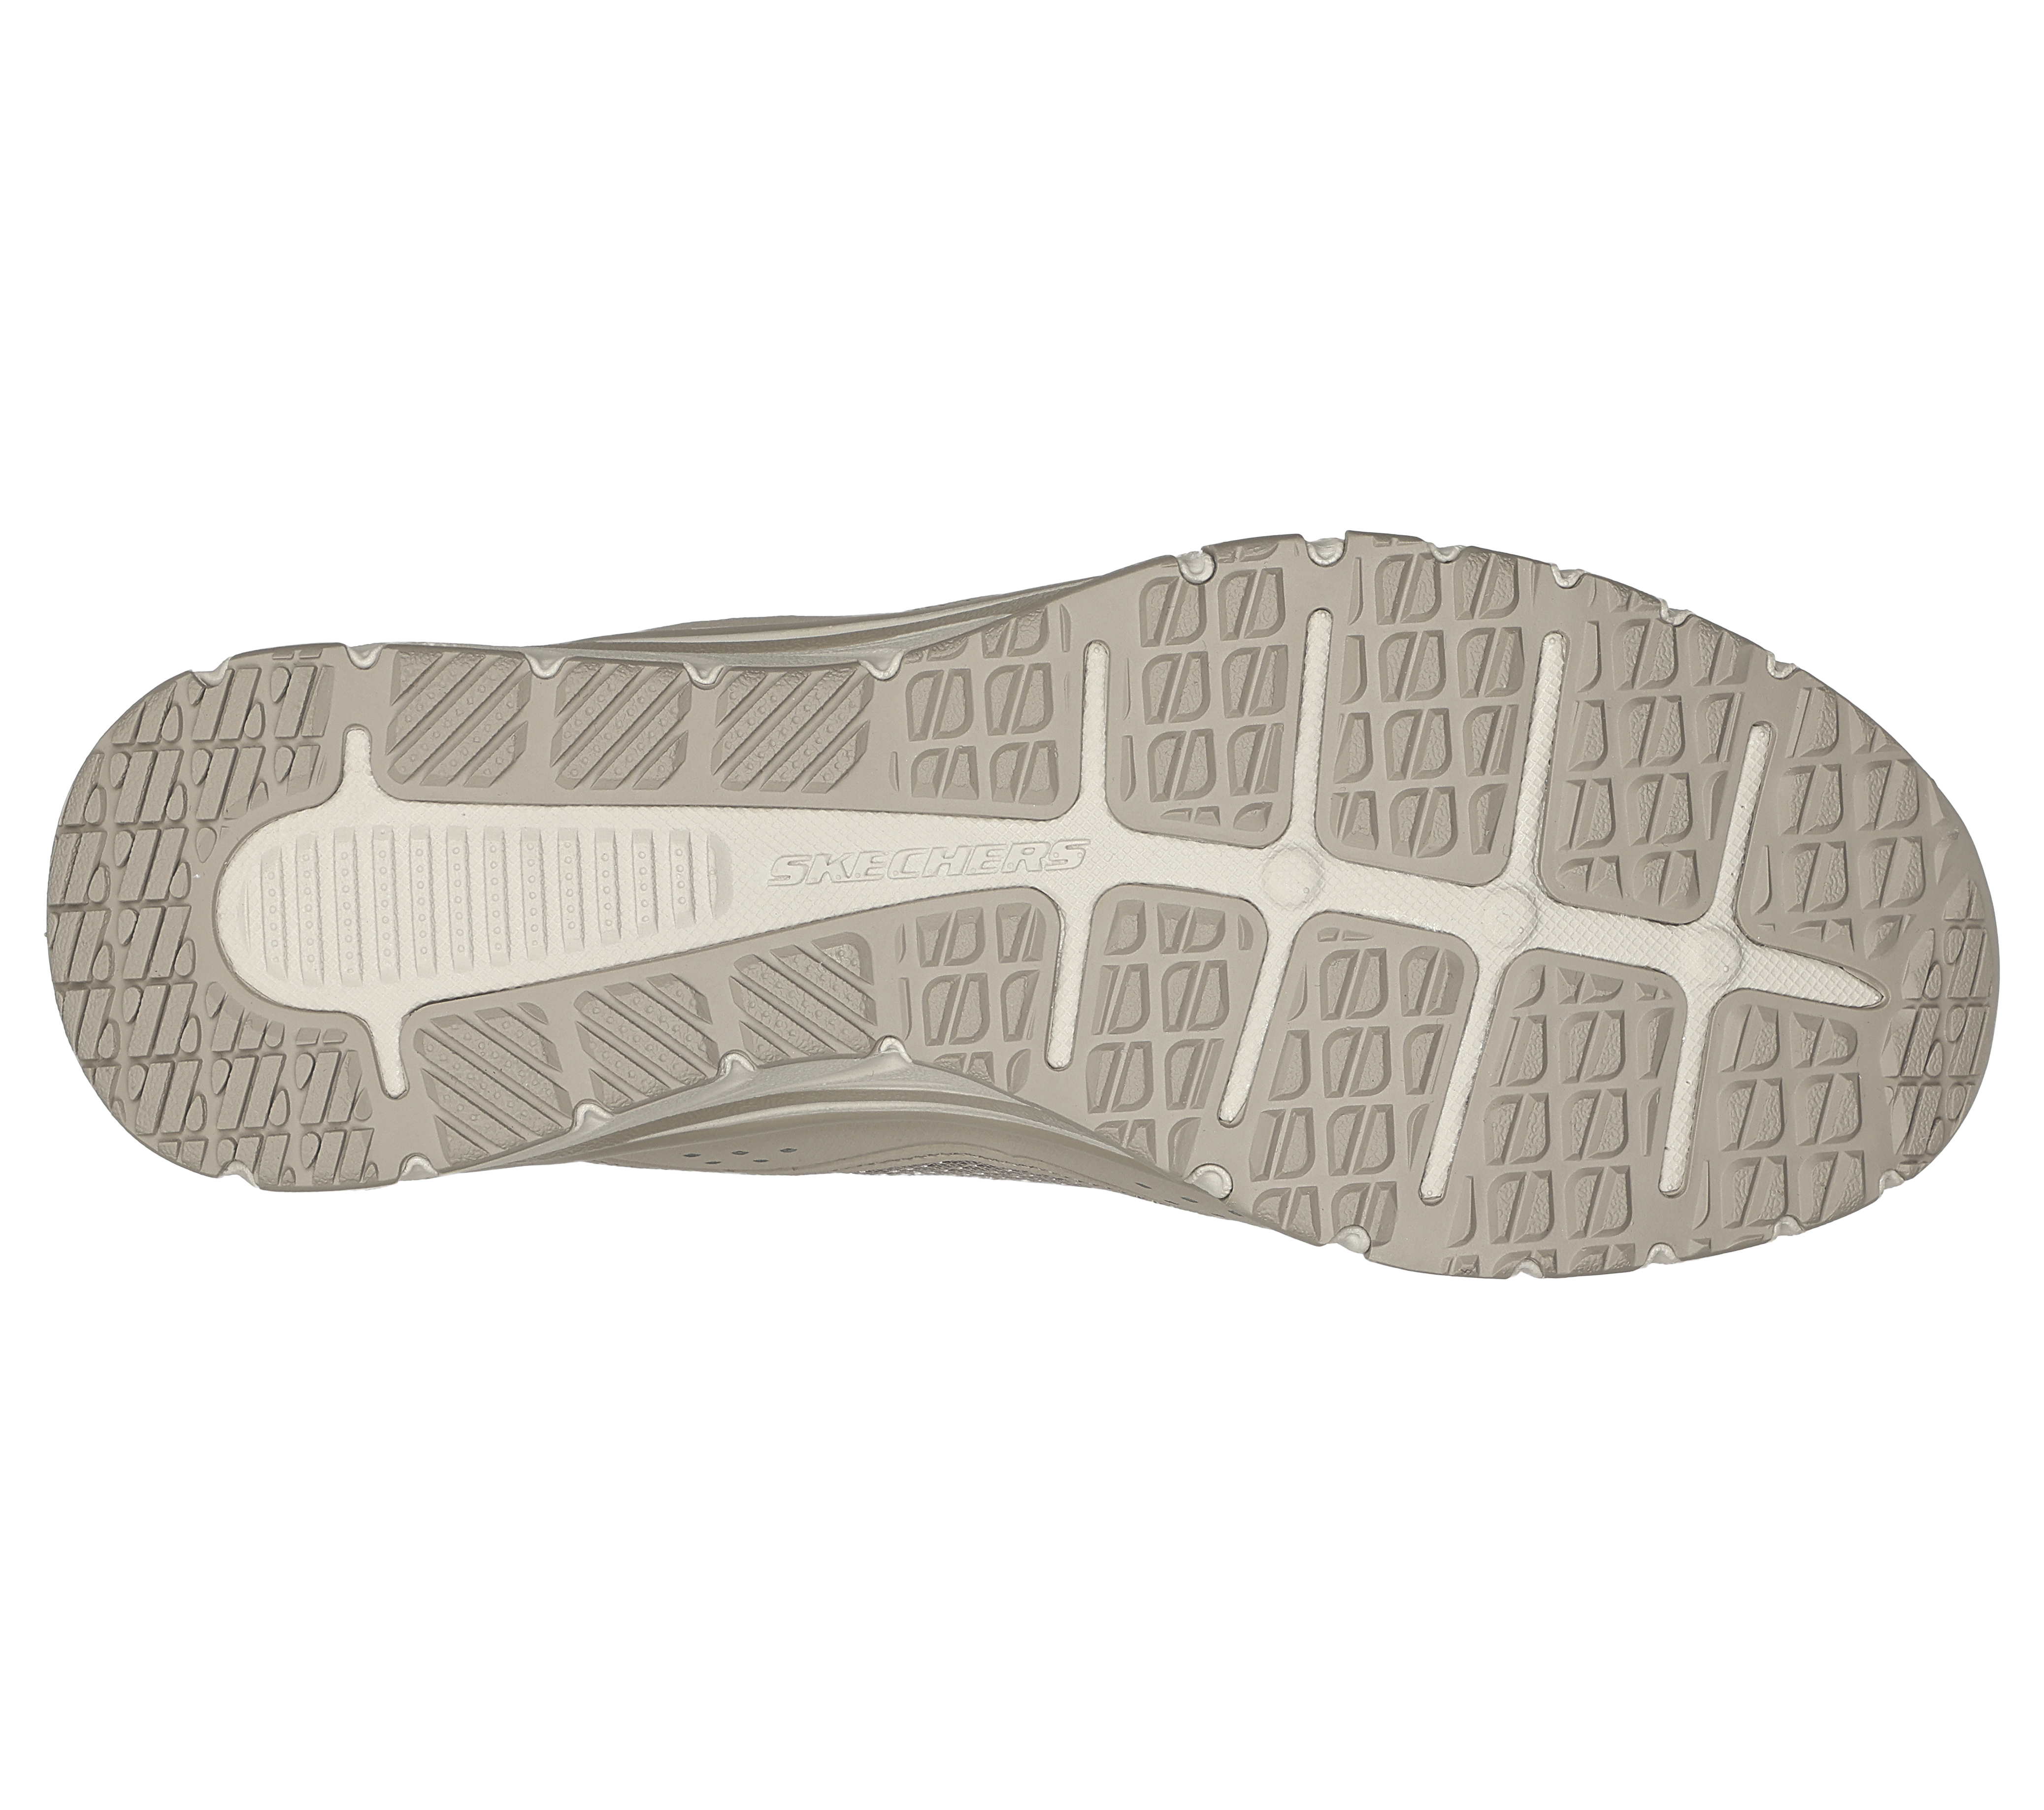 Skechers Women's shoes LEISURELY 104289 #104289$BBK.02SK Online